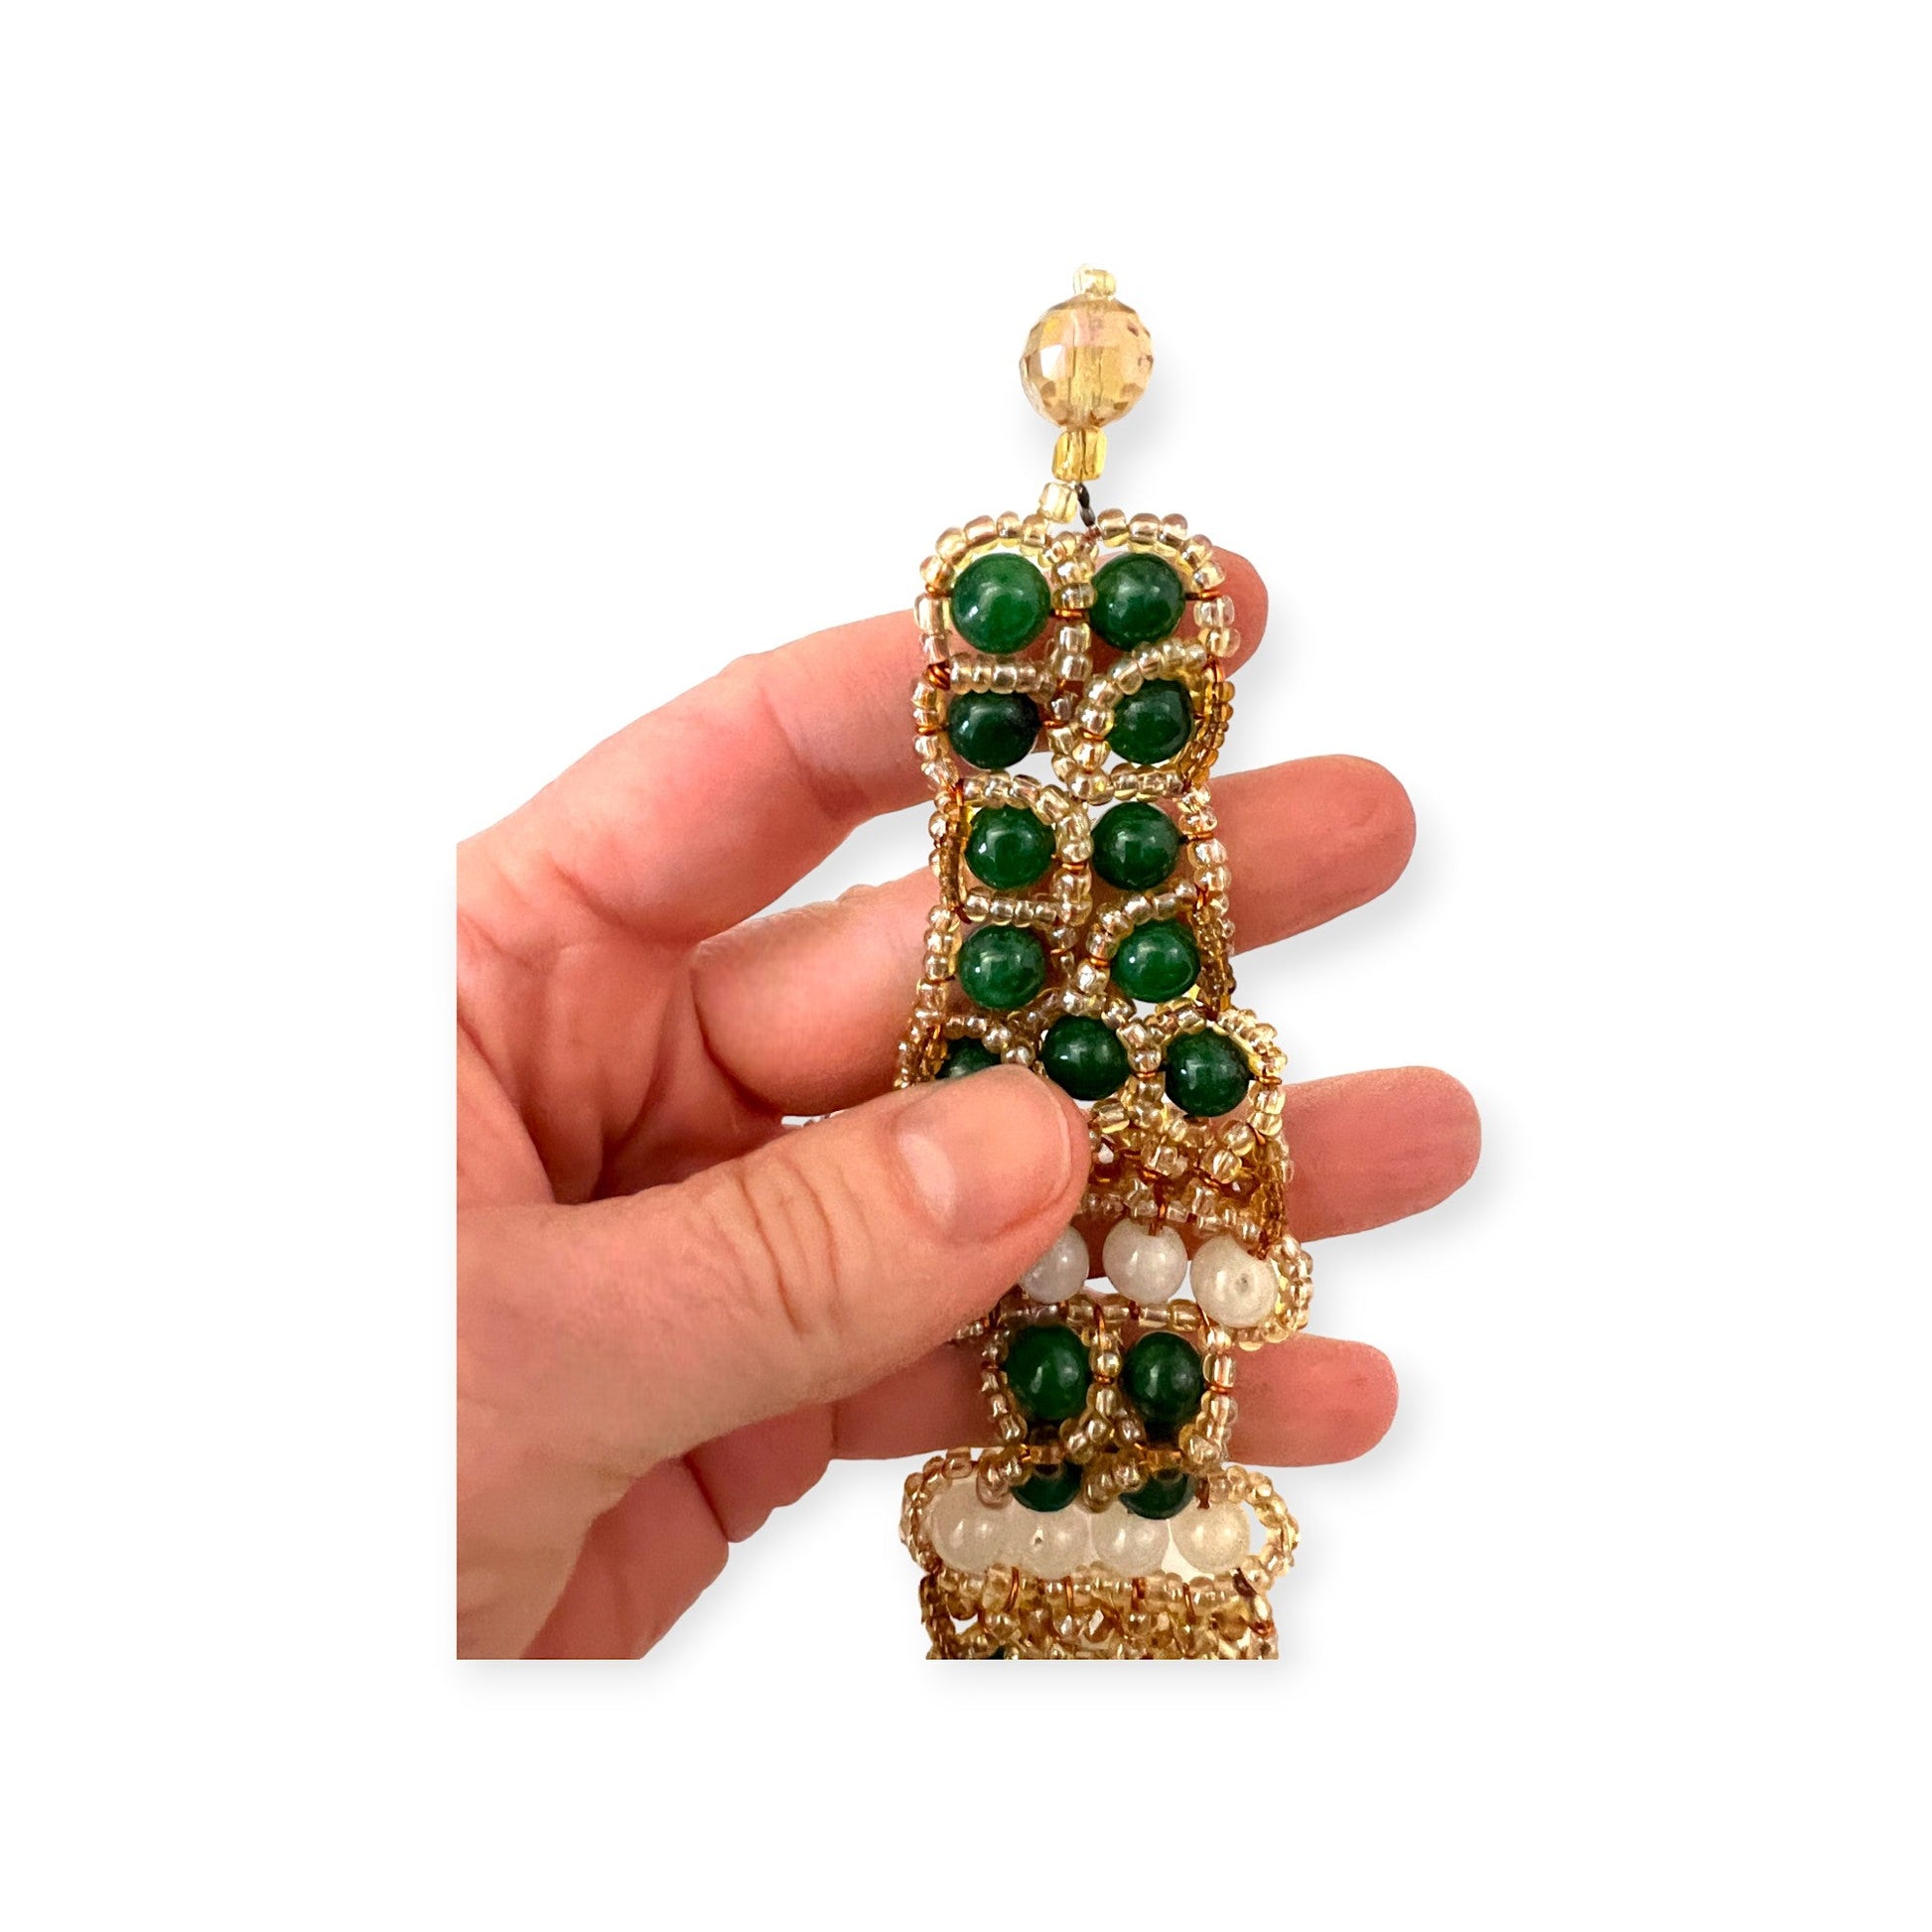 Jade multi-tone beaded bracelet with malachite - Sundara Joon - Sundara Joon